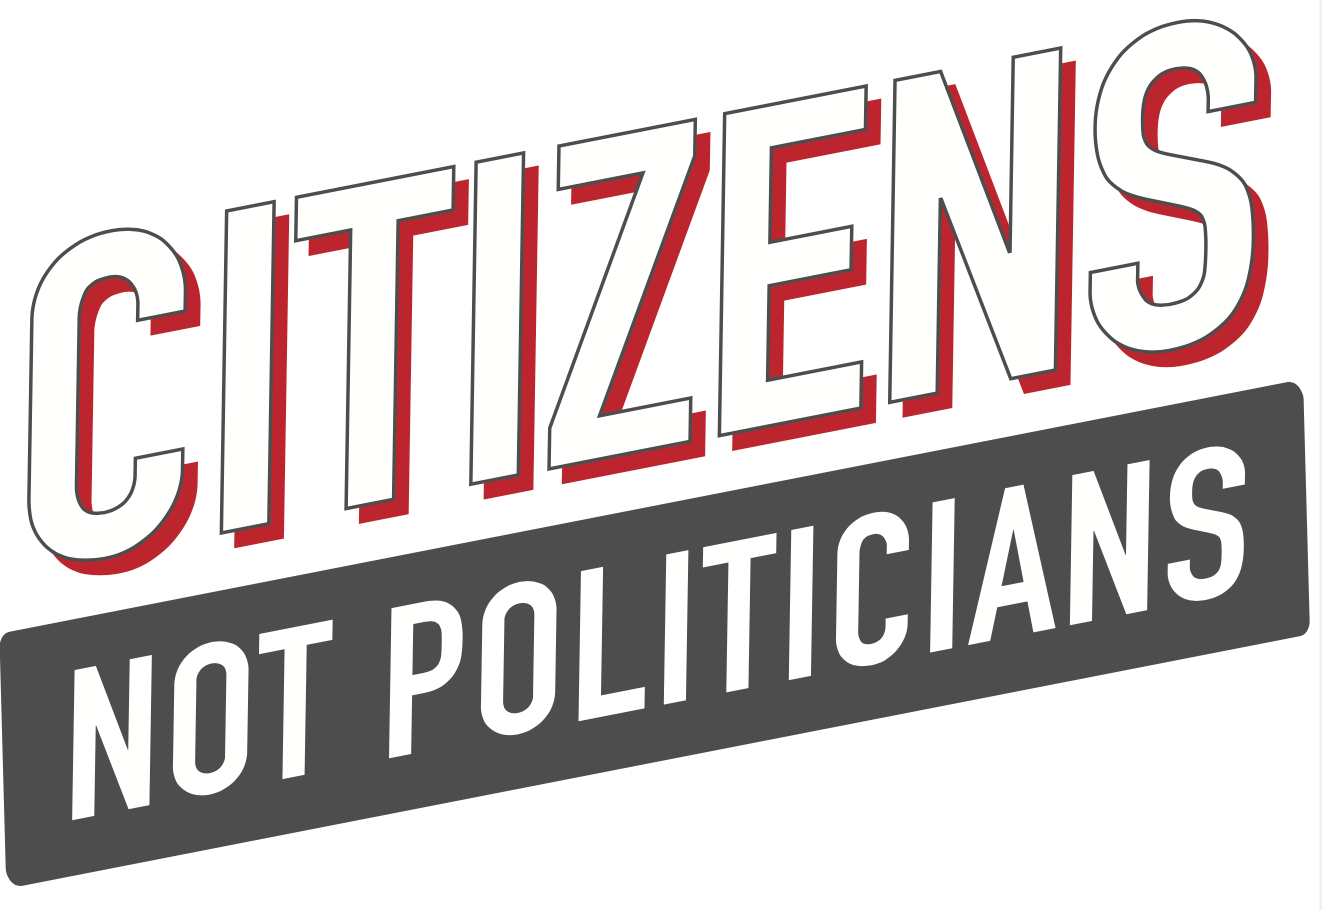 Citizens Not Politicians